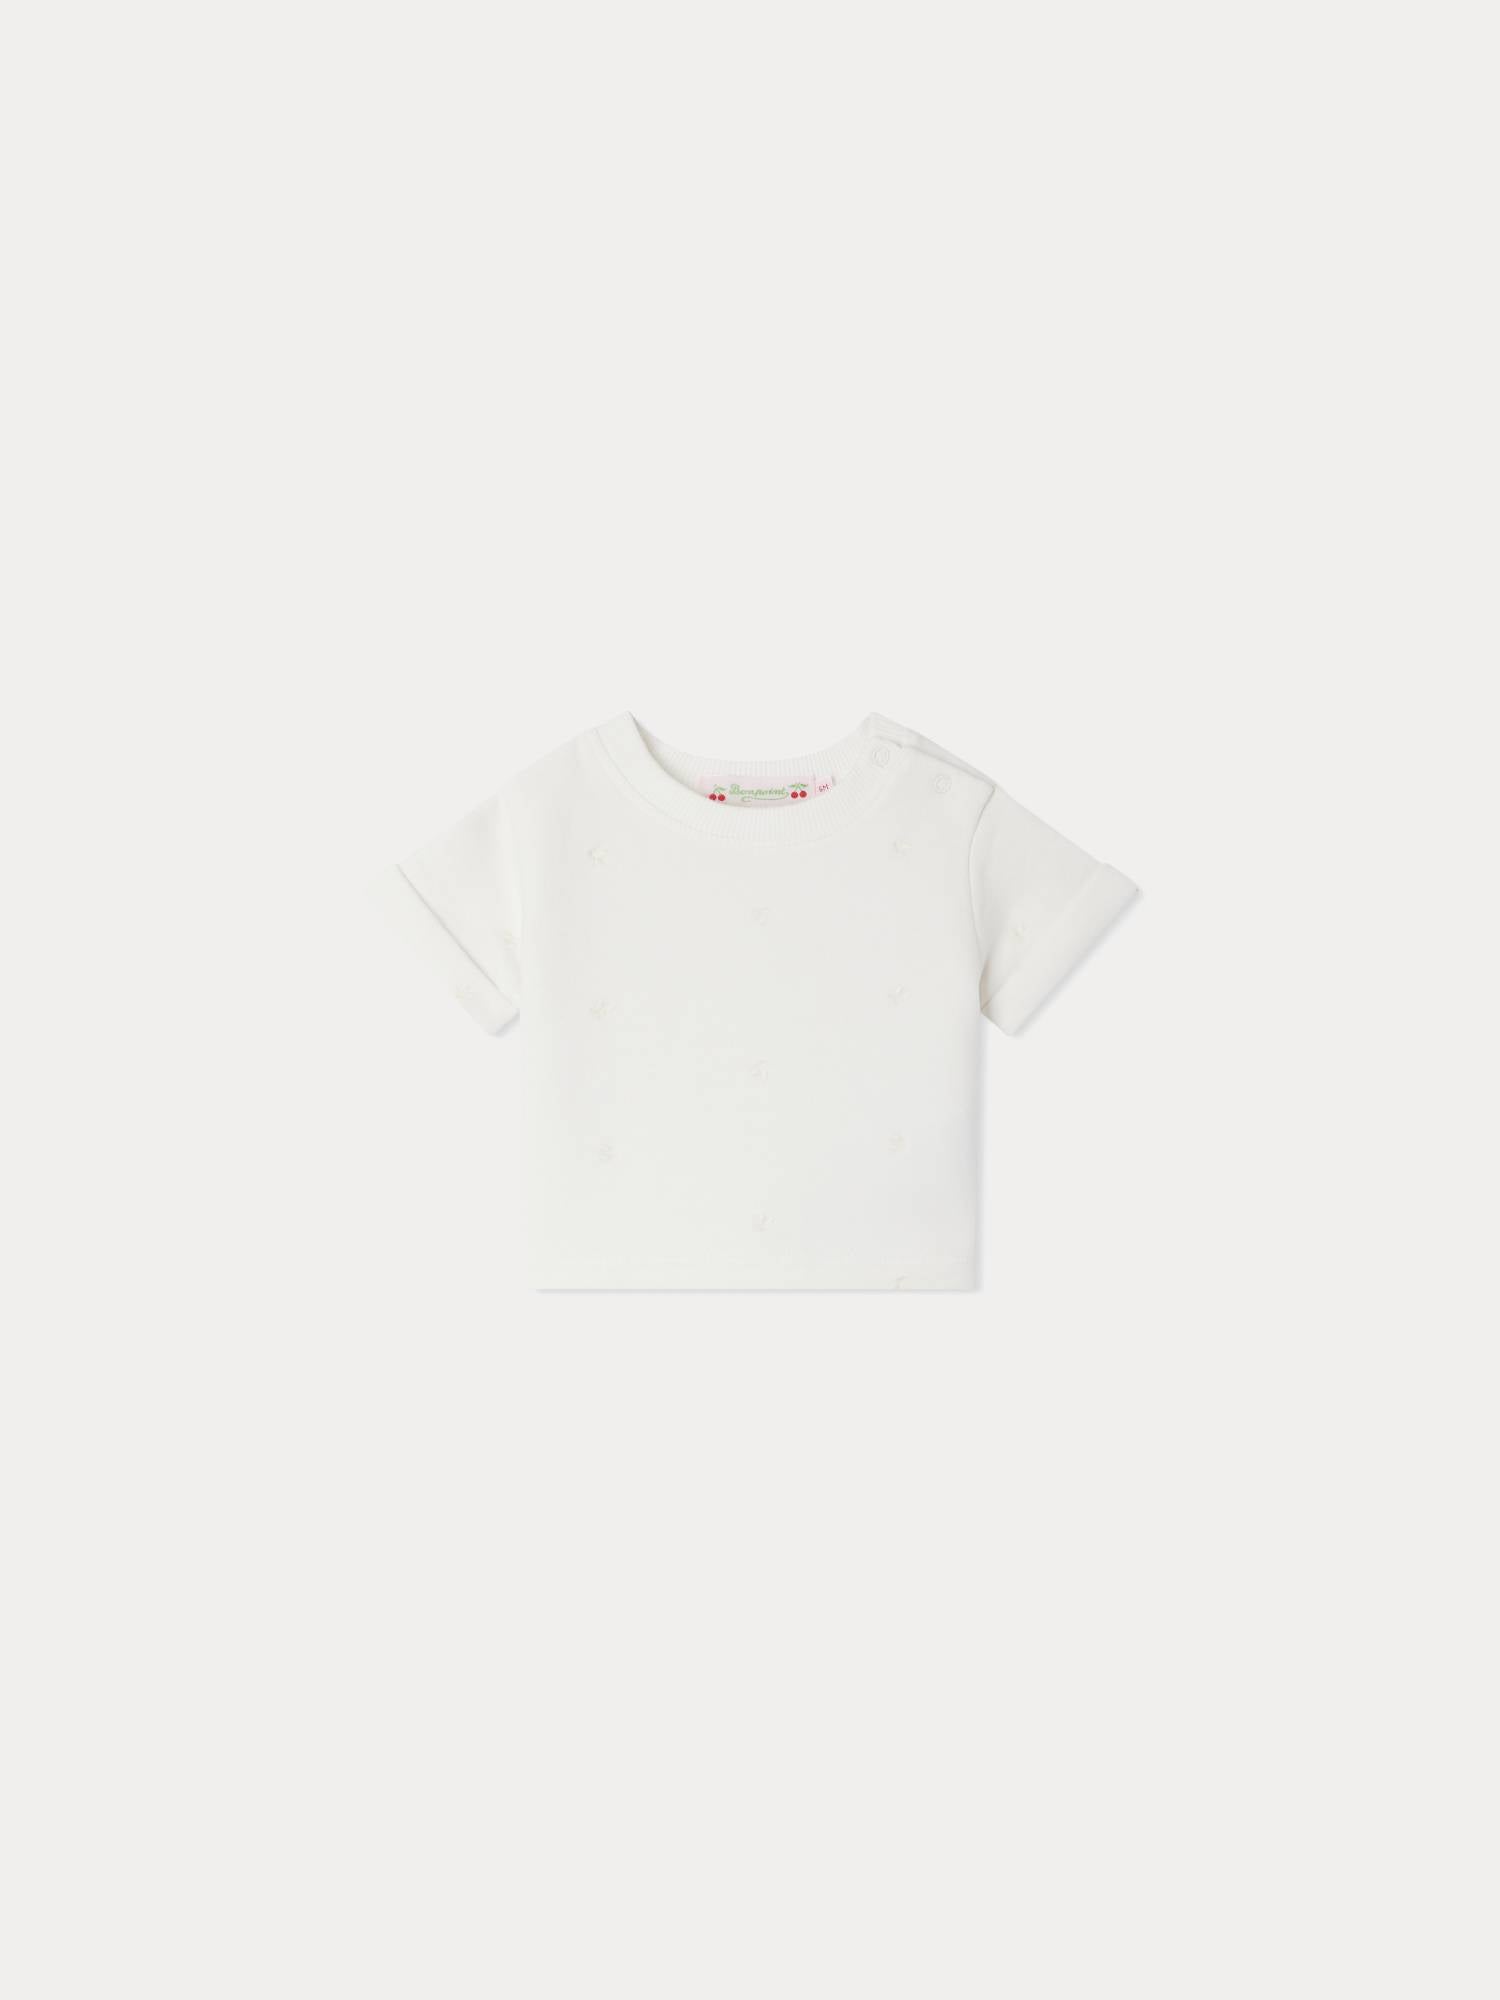 Clelie T-Shirt white milk • Bonpoint